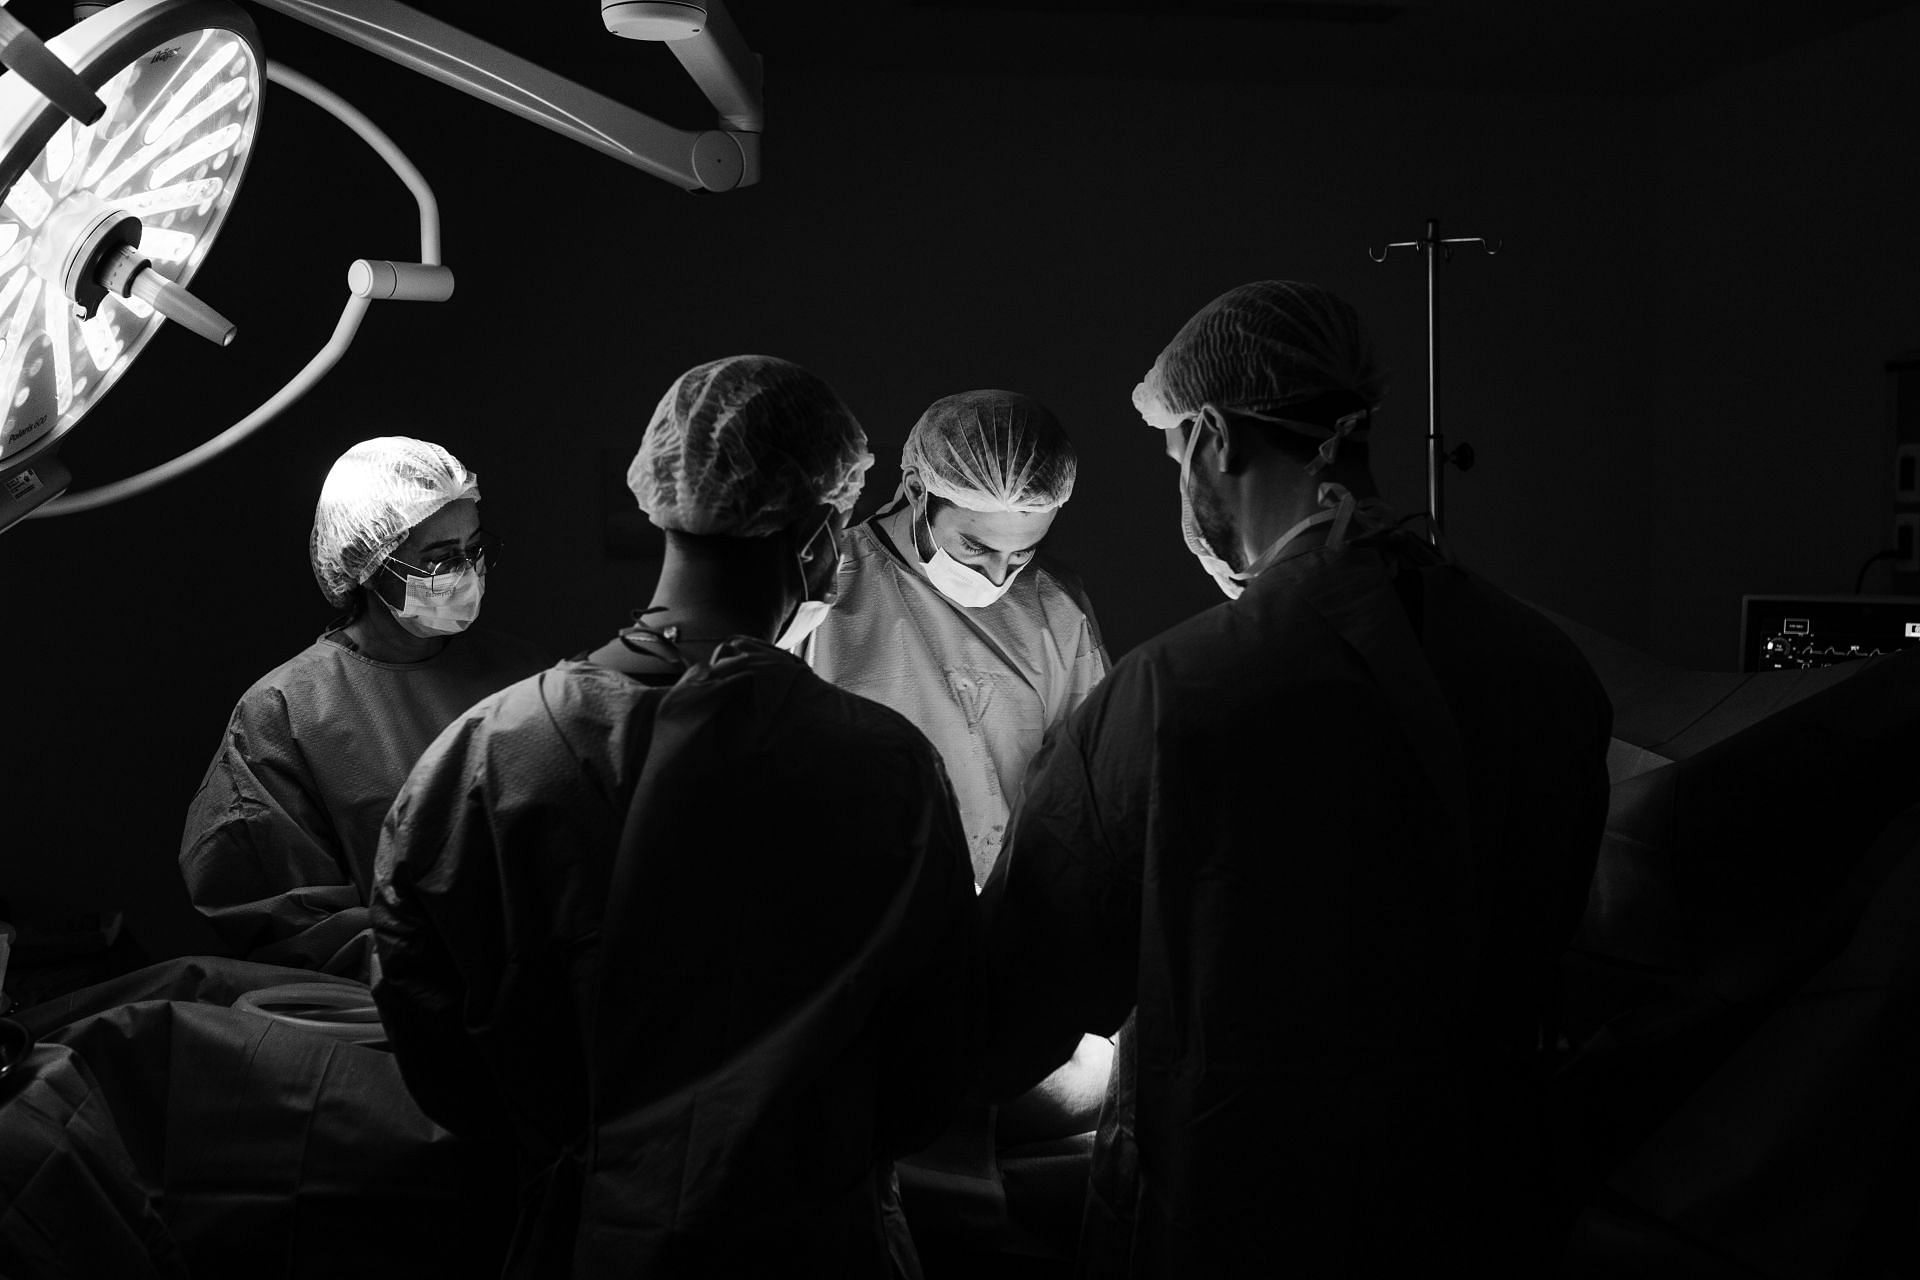 Surgical options must be chosen after healthcare consultation. (Image via Unsplash/ Jonathan Borba)